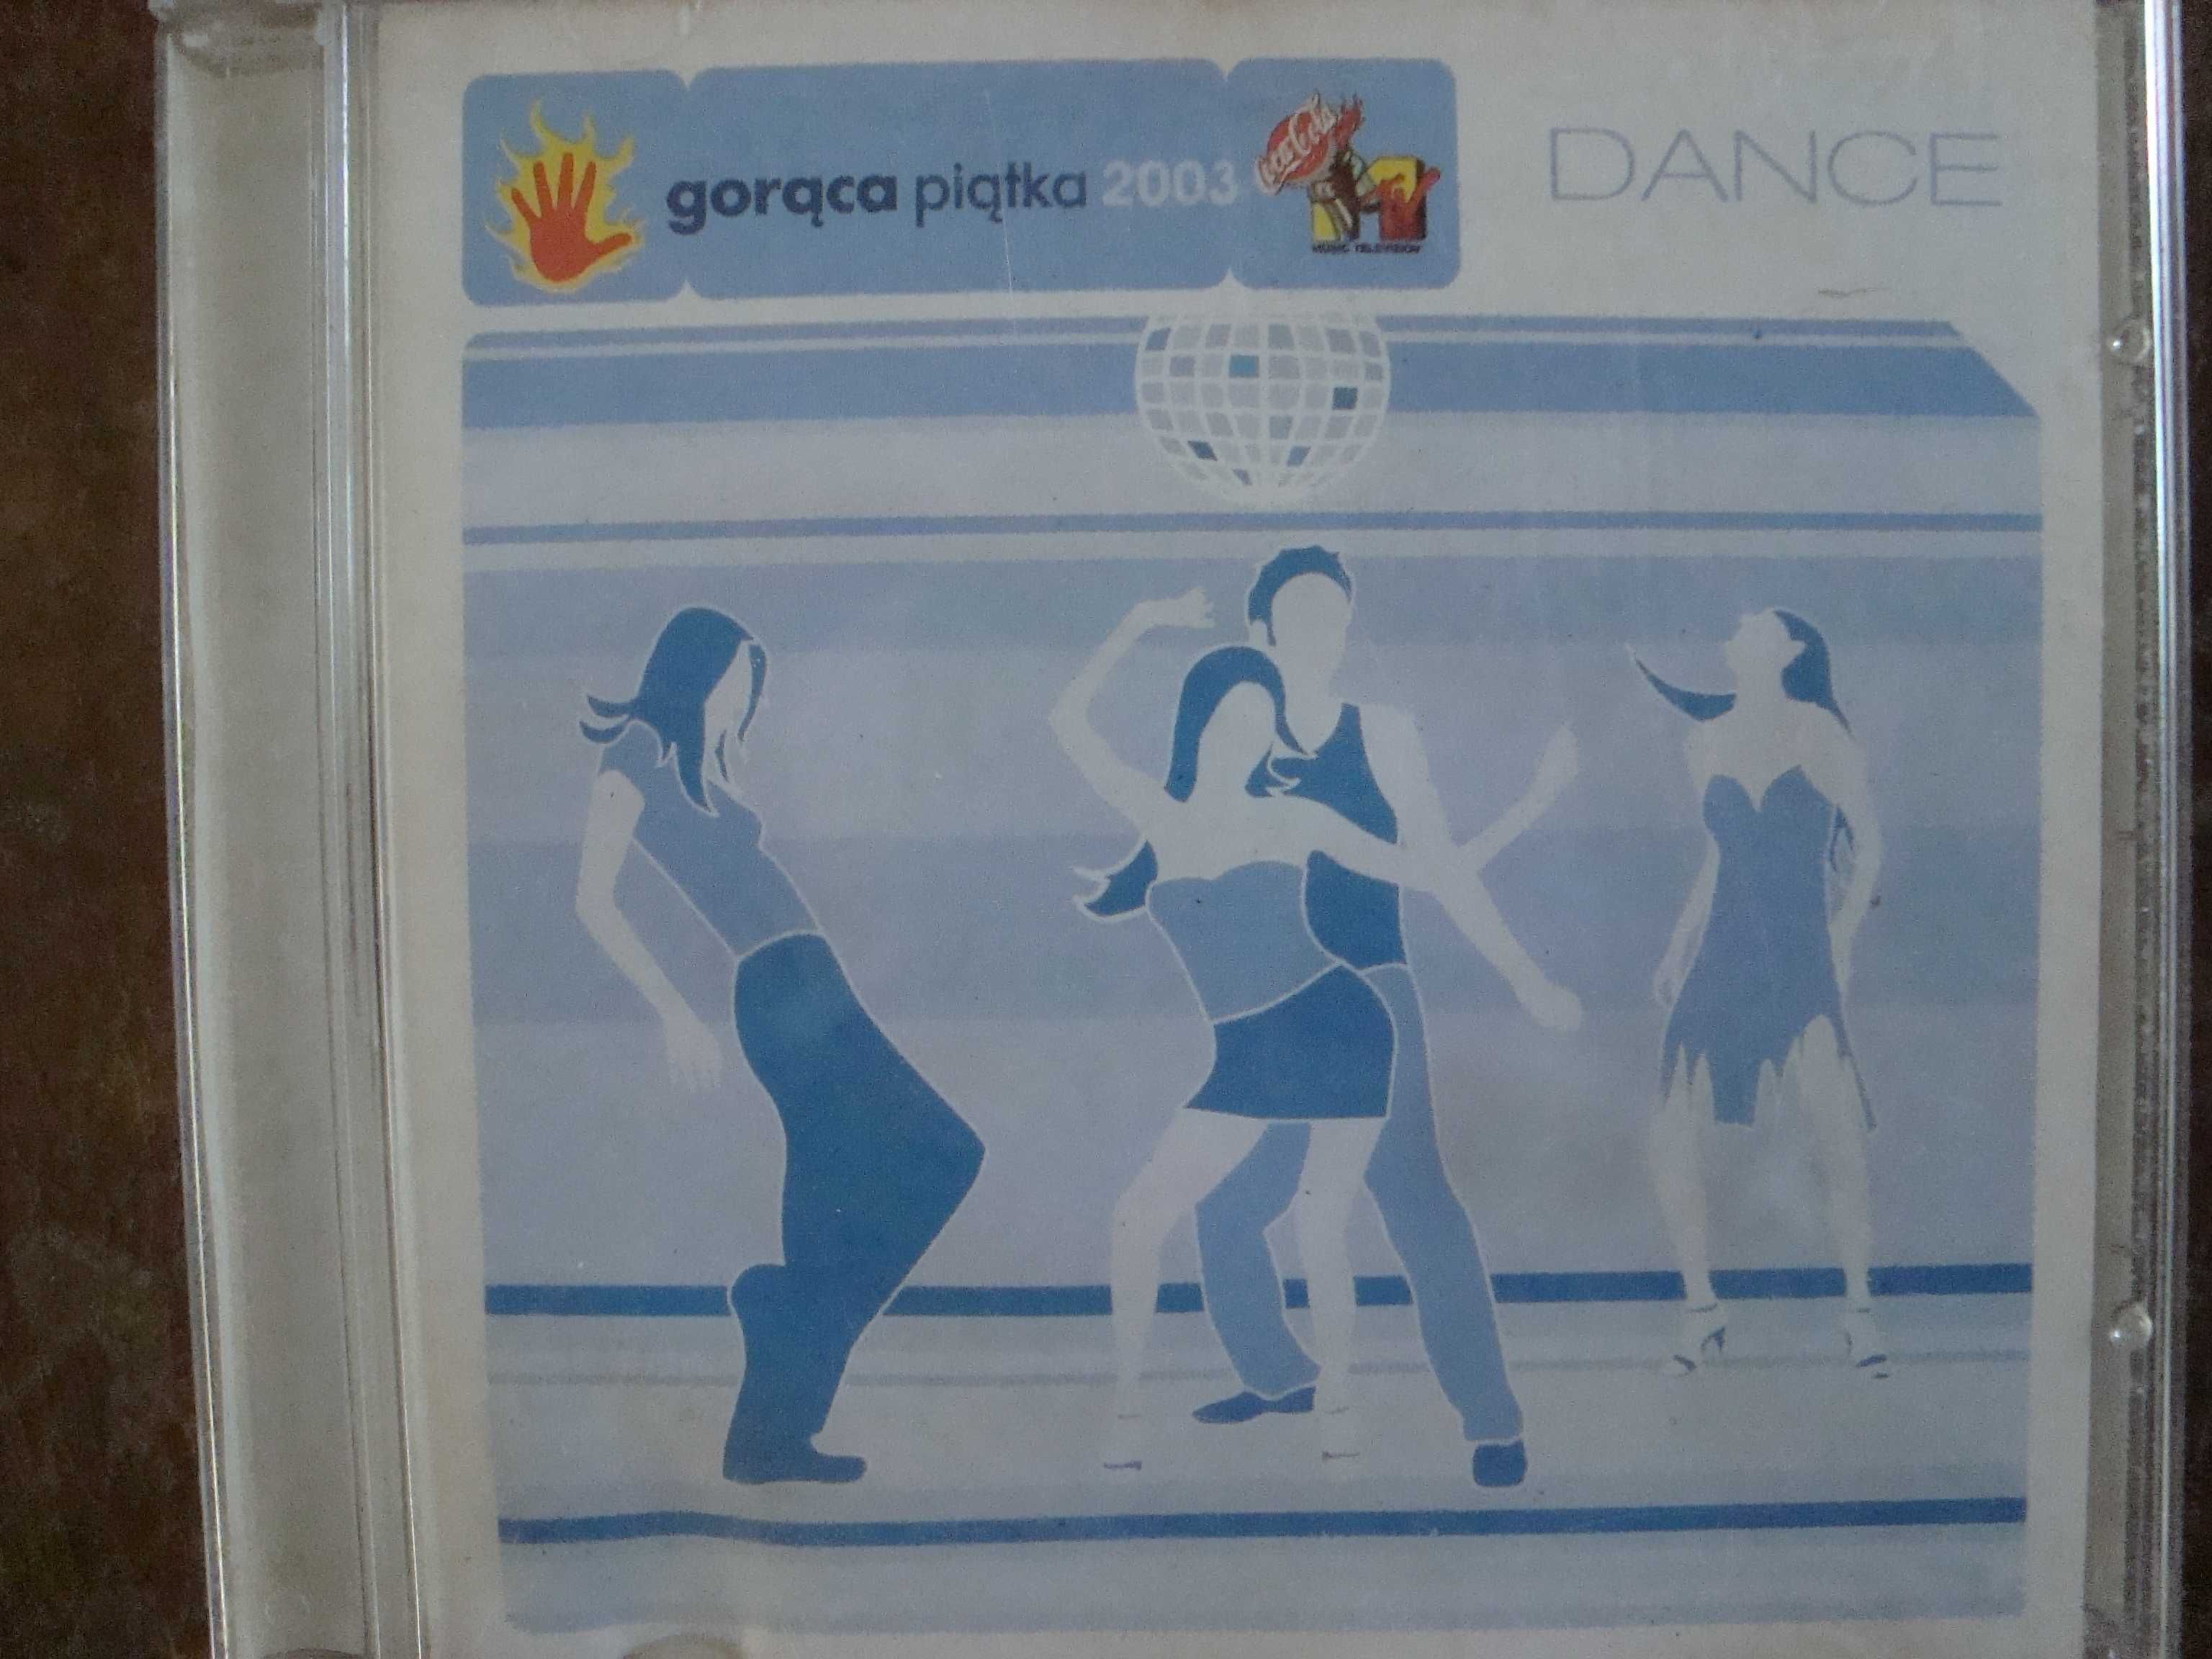 muzyka płyta  CD dance